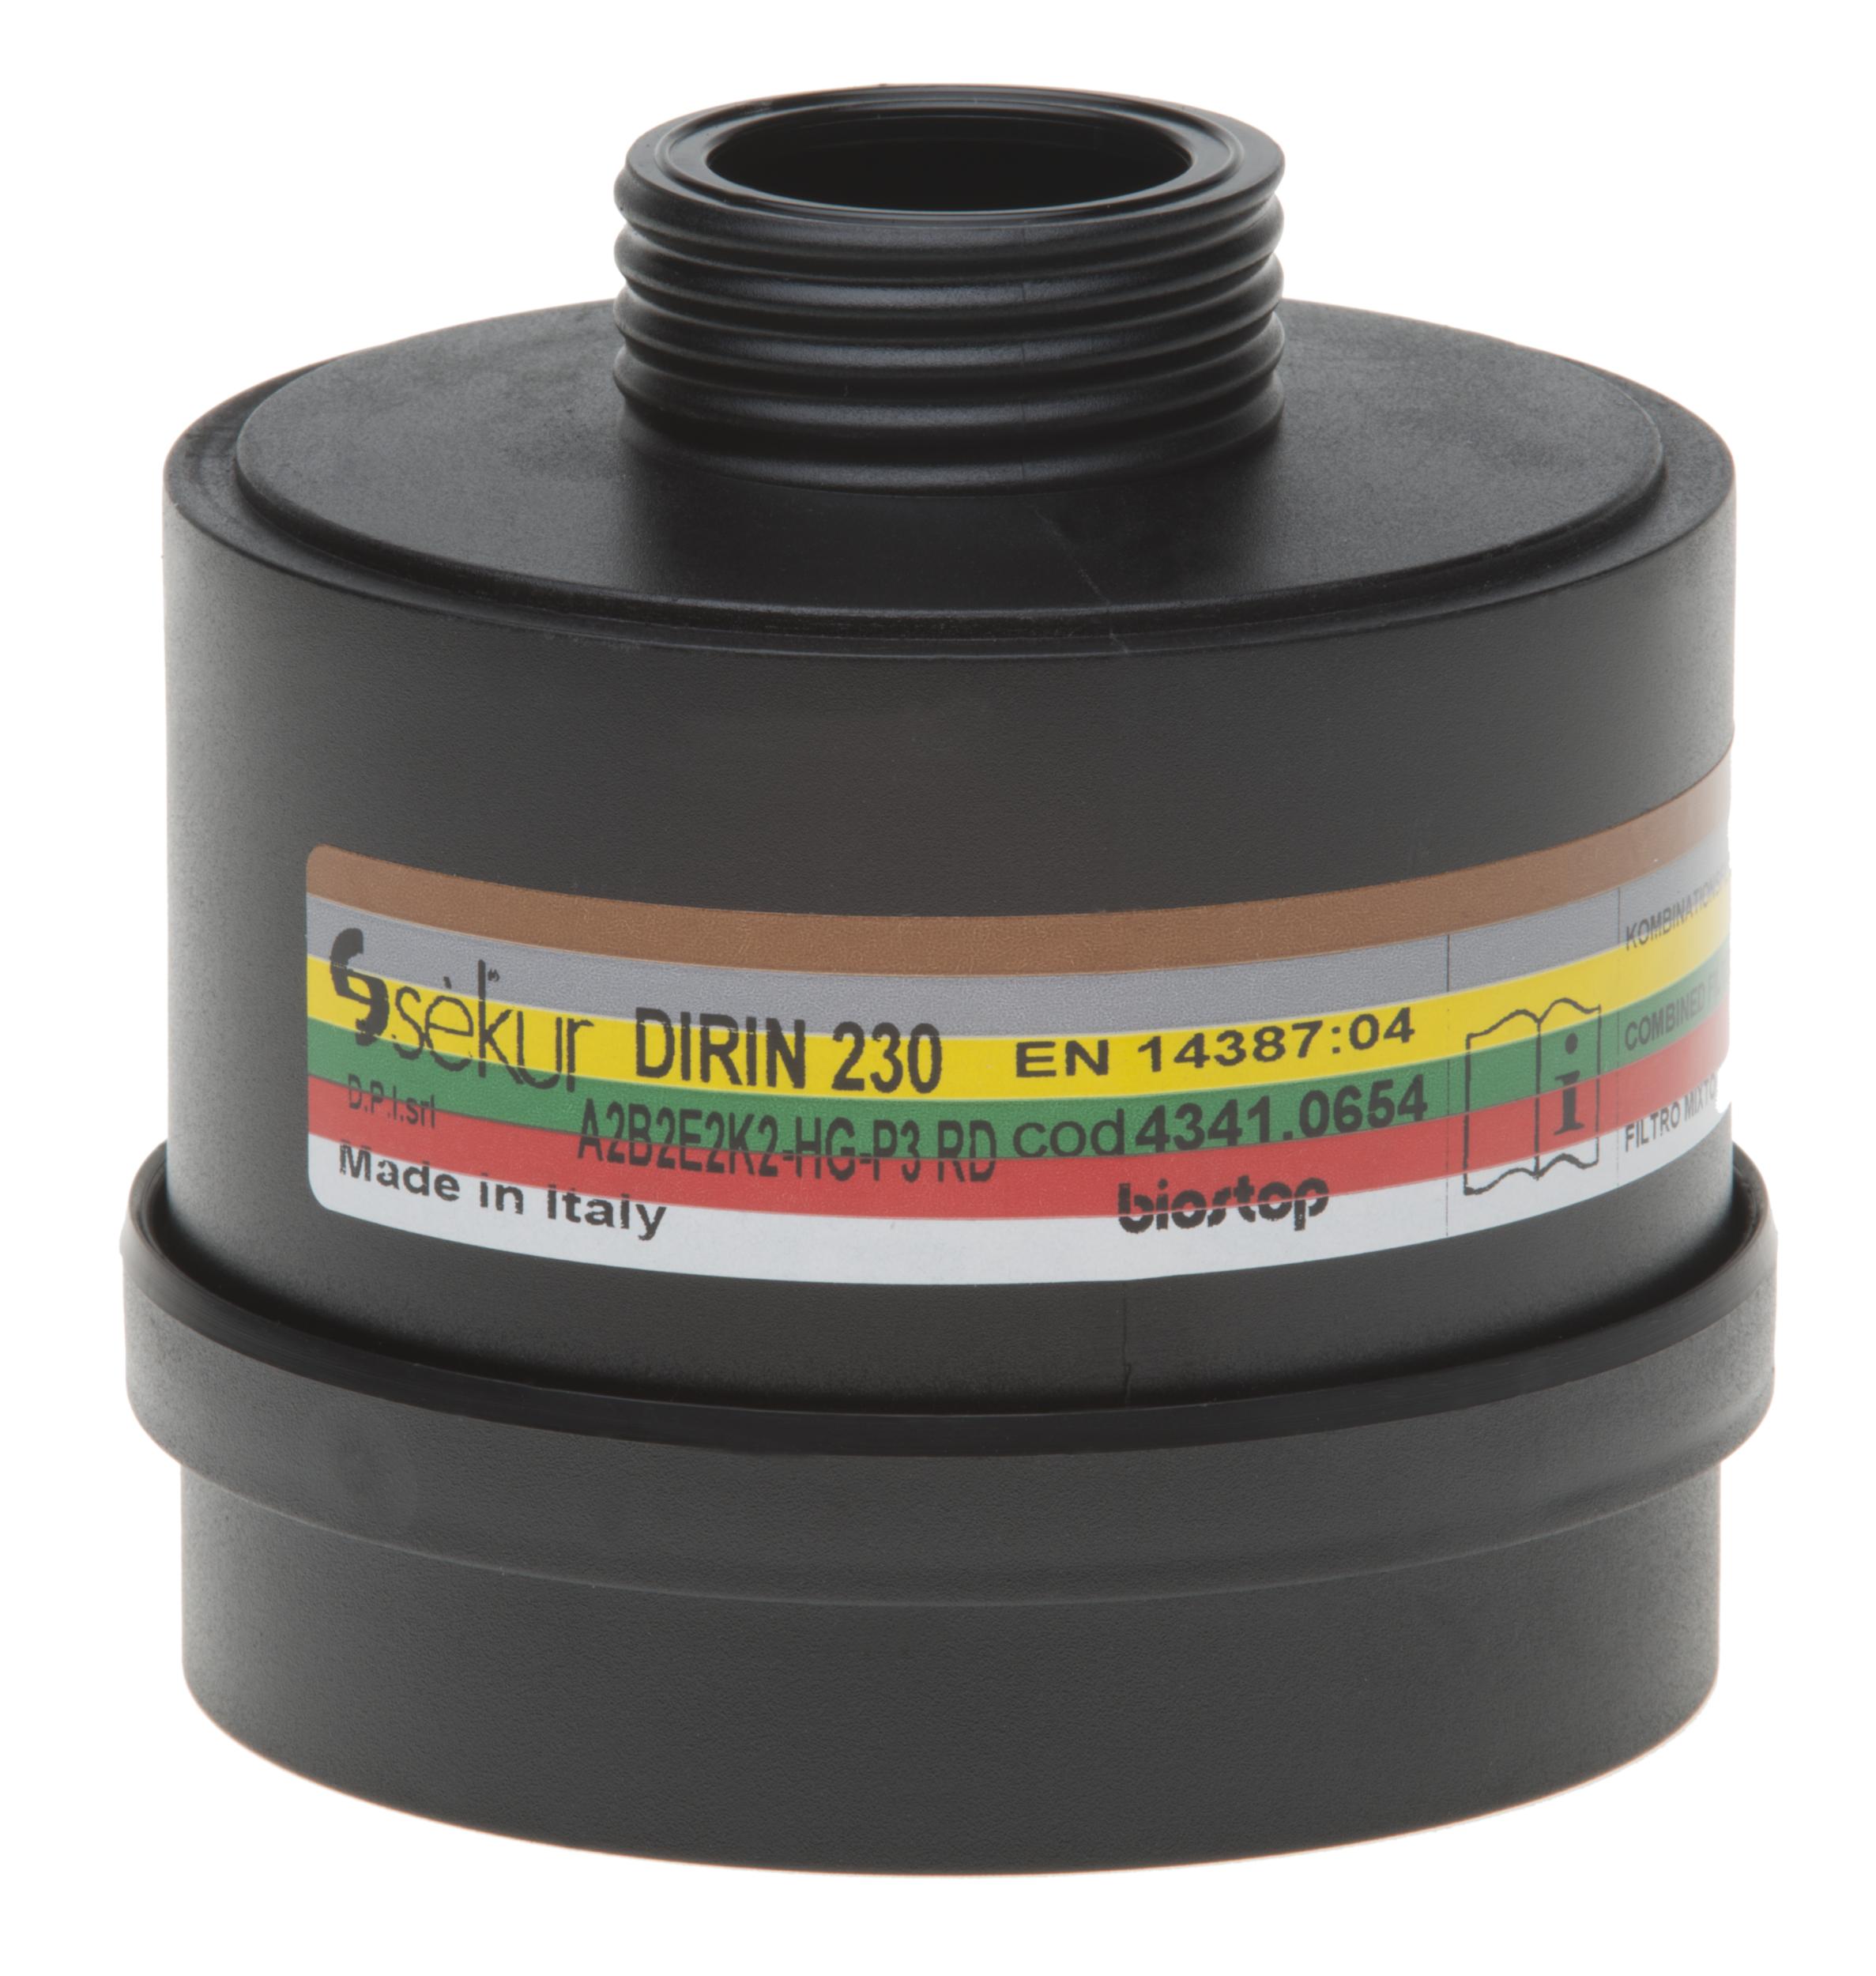 EKASTU Mehrbereichs-Kombifilter für Atemschutzmasken DIRIN 230A2E2K2 HG-P3R D